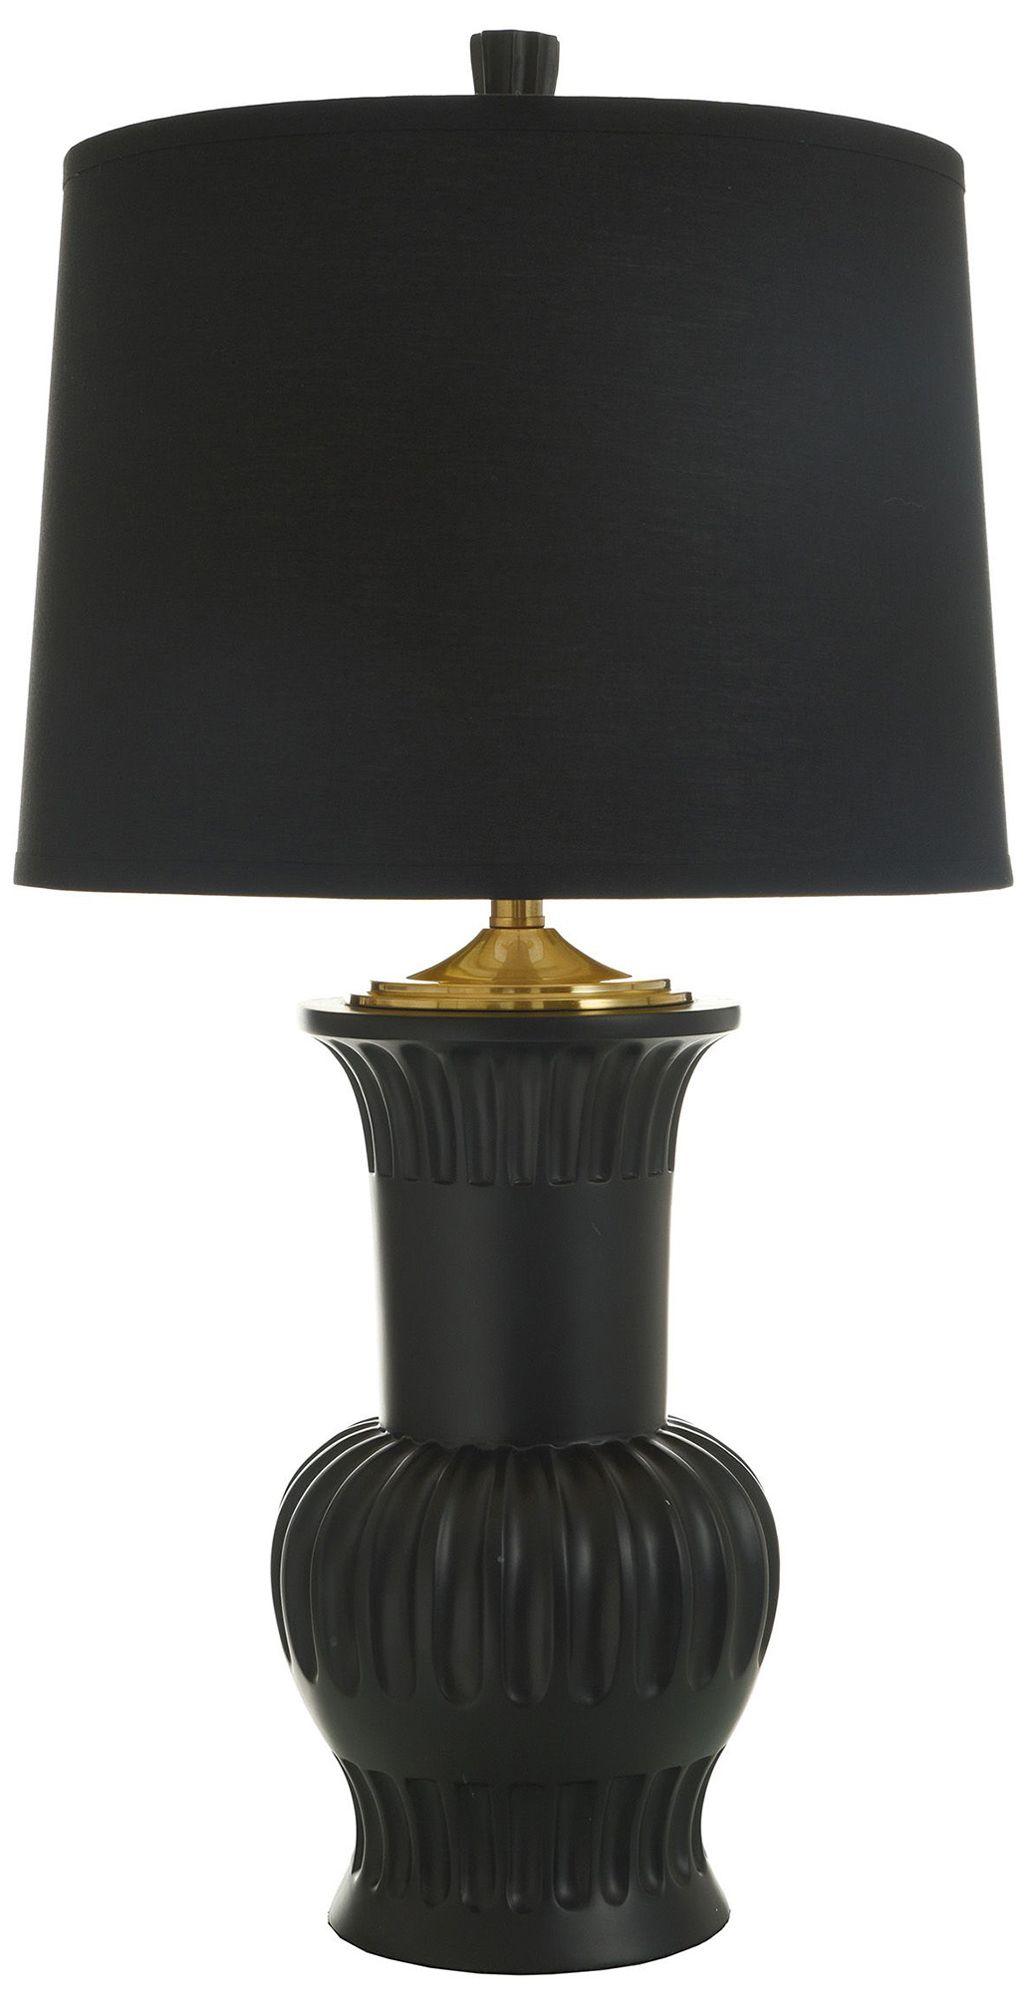 Dann Foley 34.25" High Black Urn Form Table Lamp